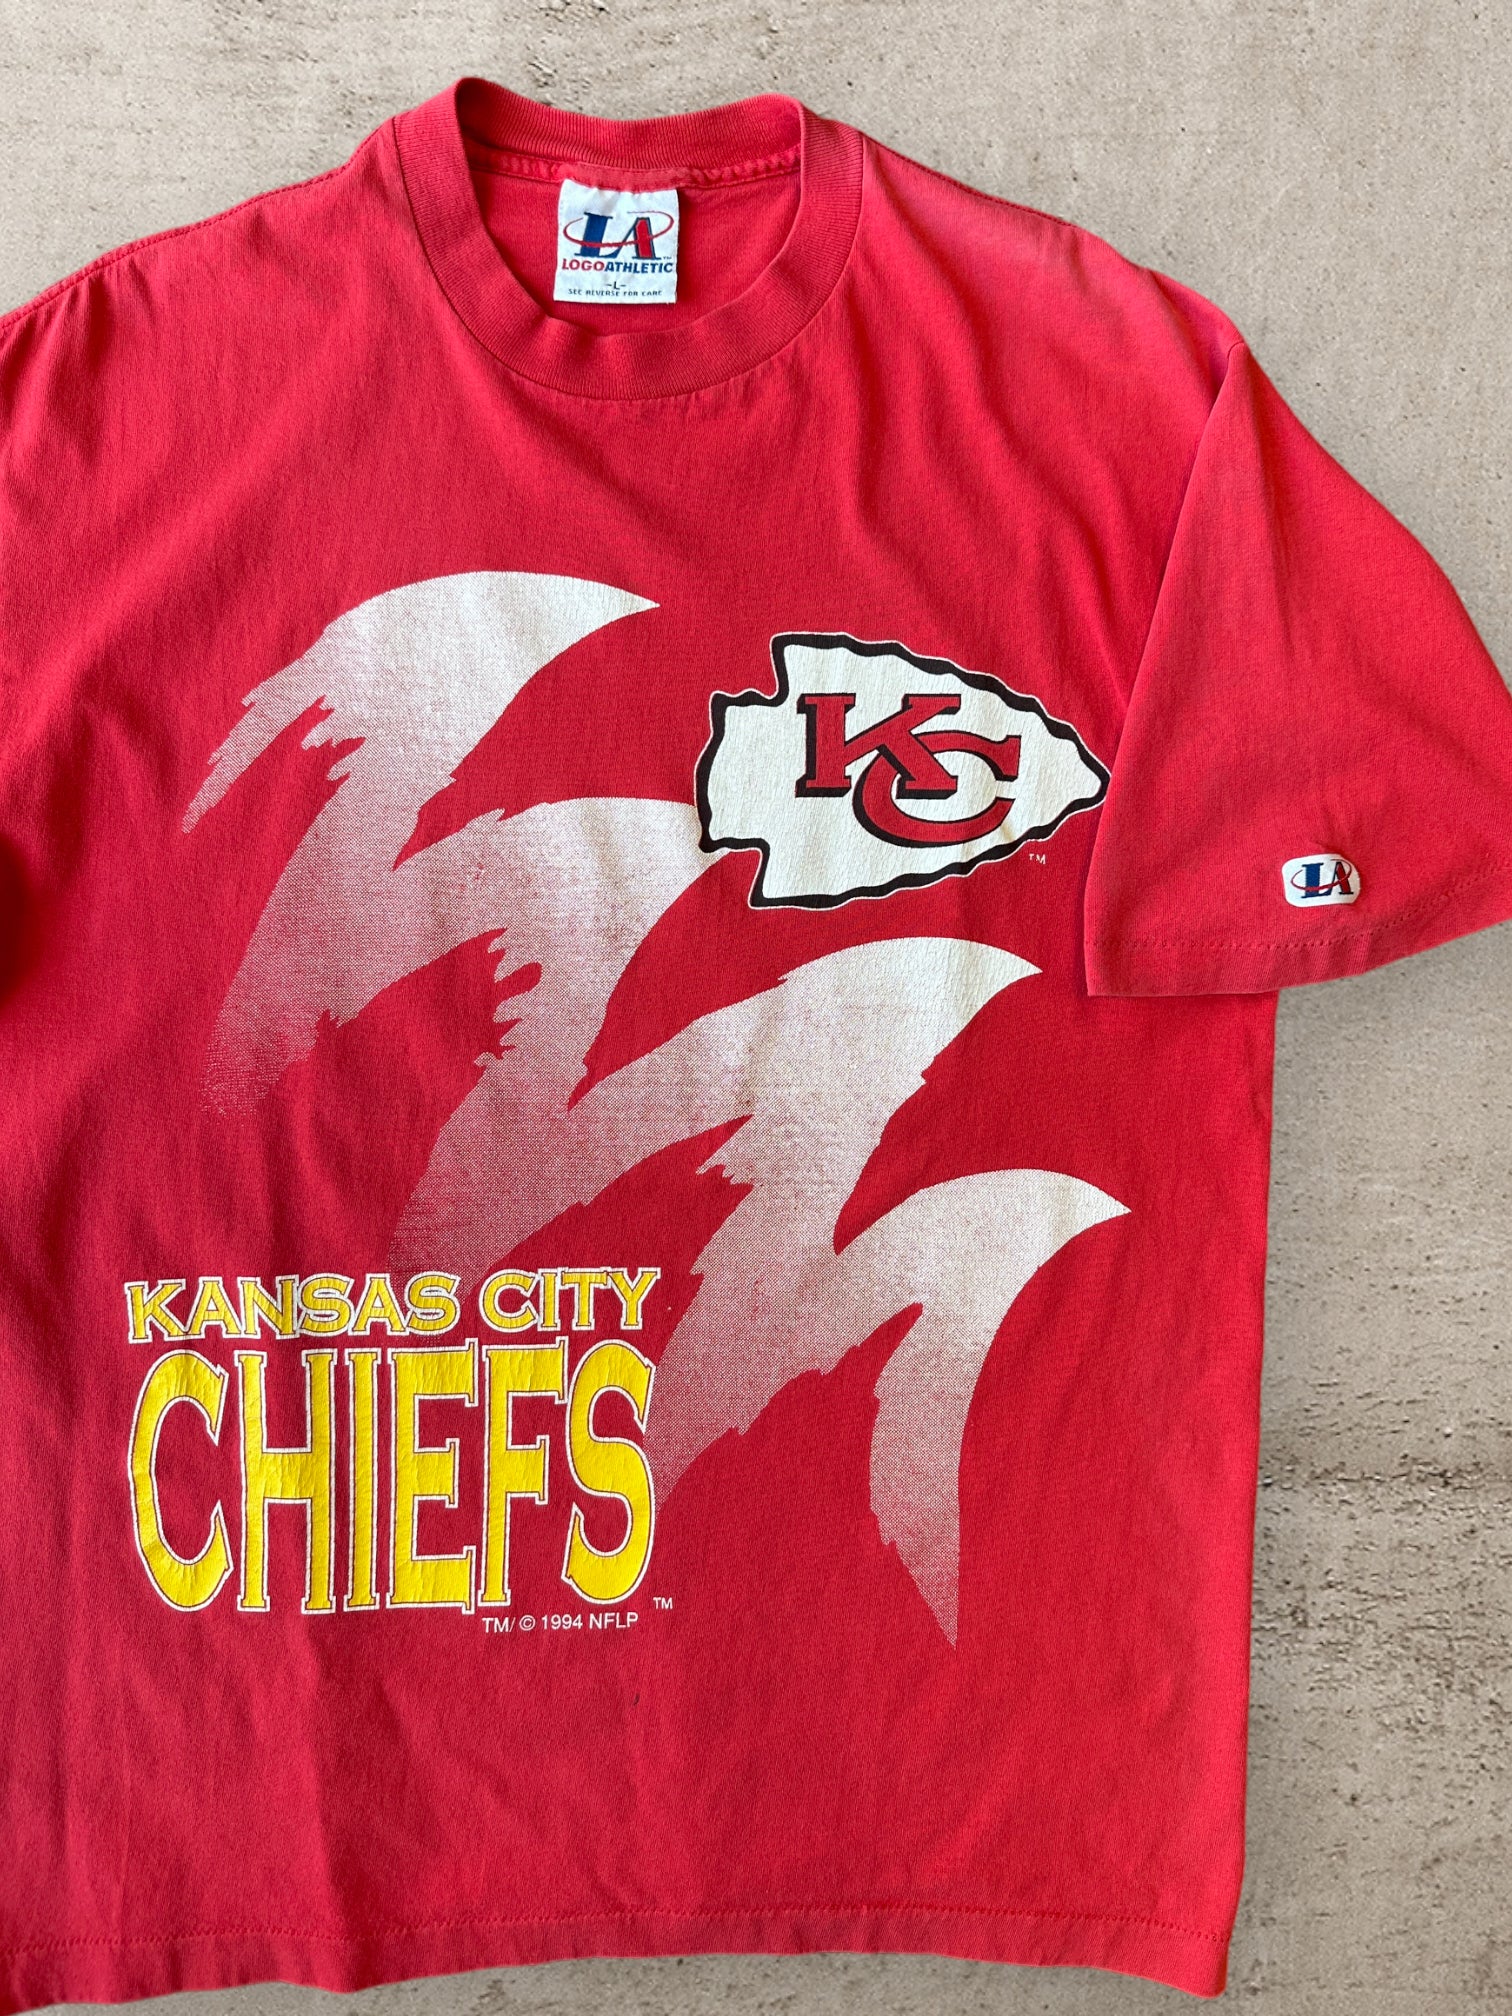 90s Kansas City Chiefs Graphic T-Shirt - Large